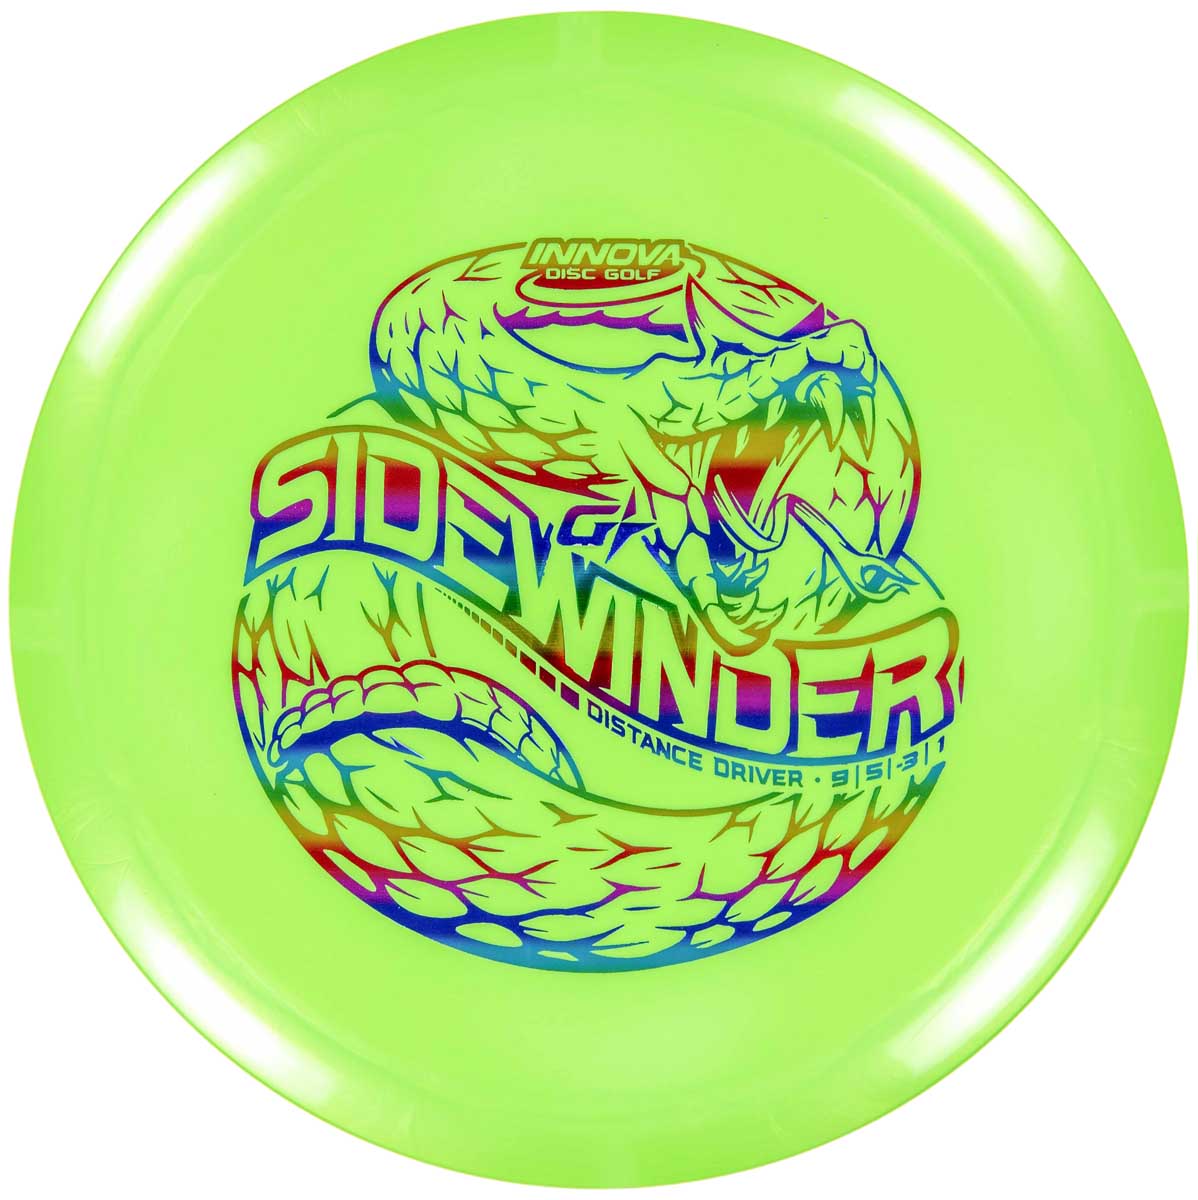 GStar Sidewinder from Disc Golf United